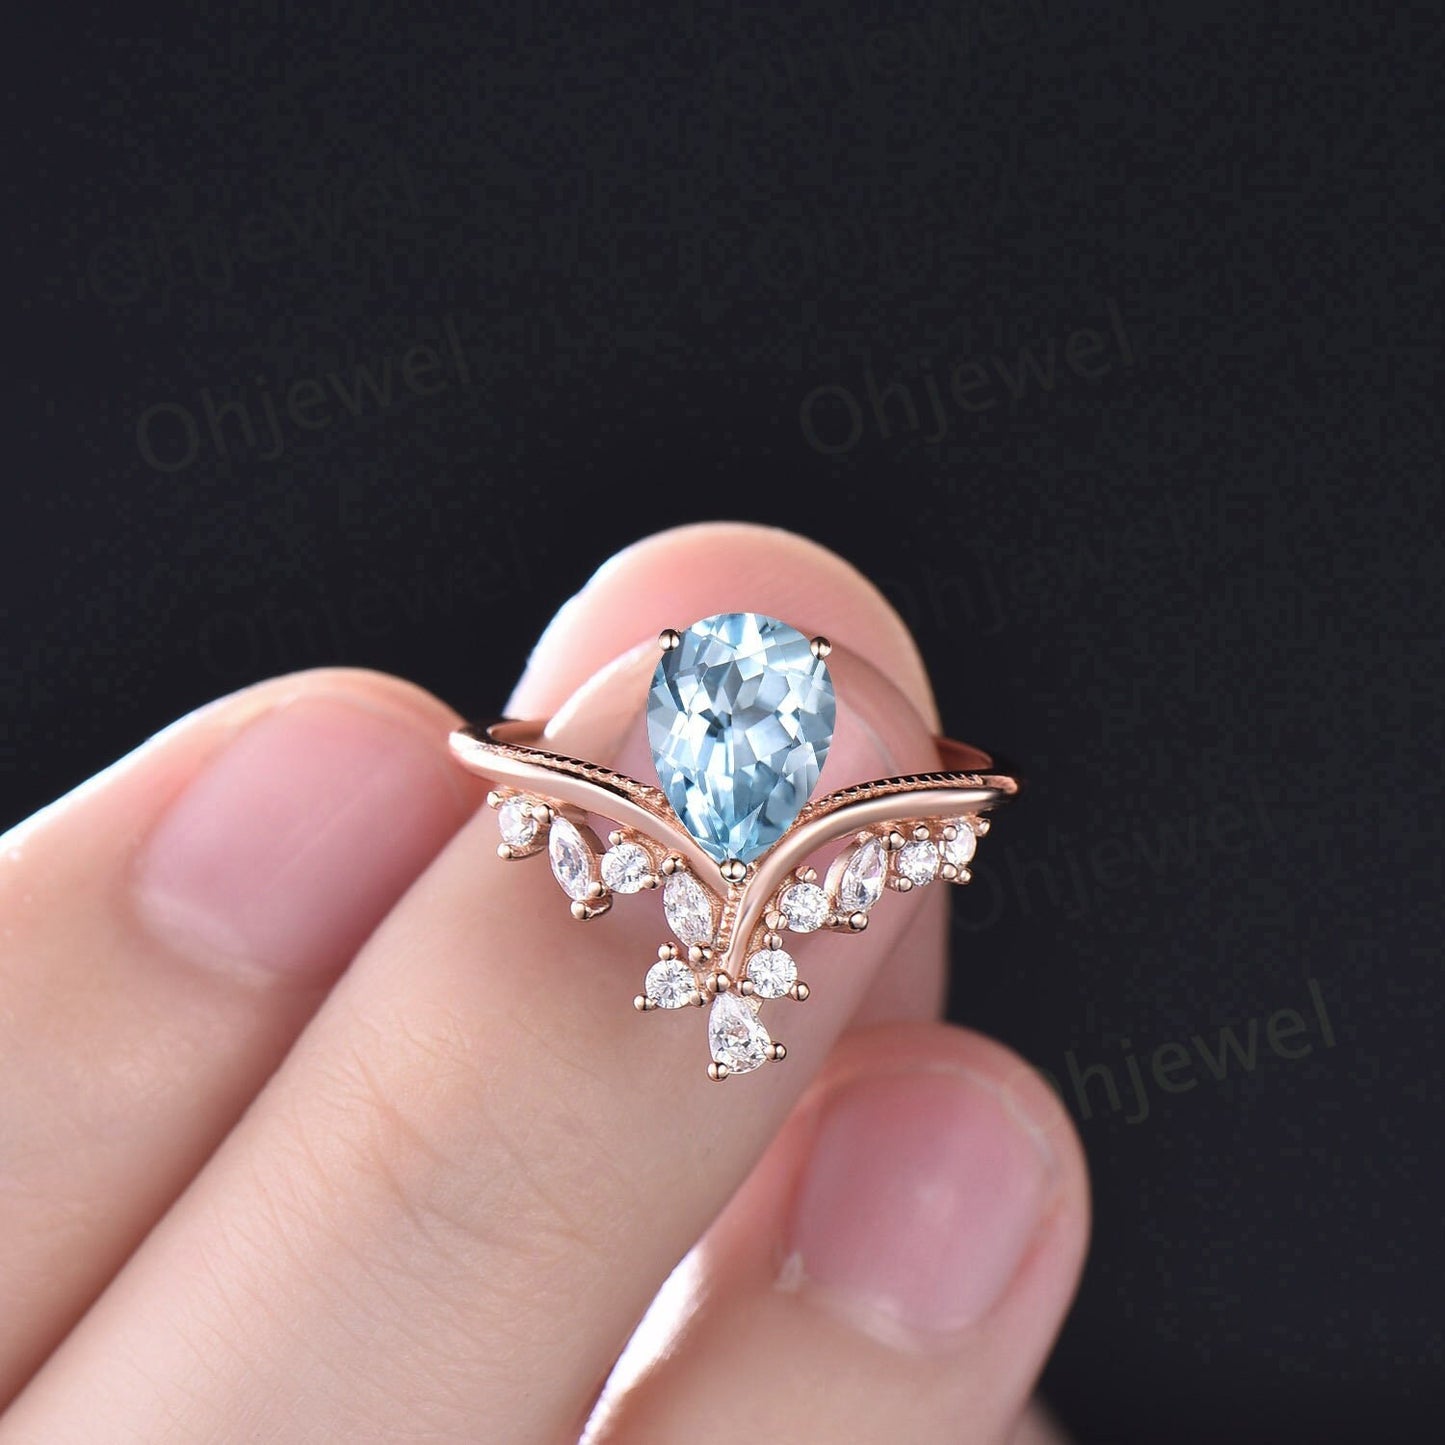 Aquamarine ring vintage pear shaped Aquamarine engagement ring 14k rose gold silver art deco cluster diamond promise wedding ring women gift